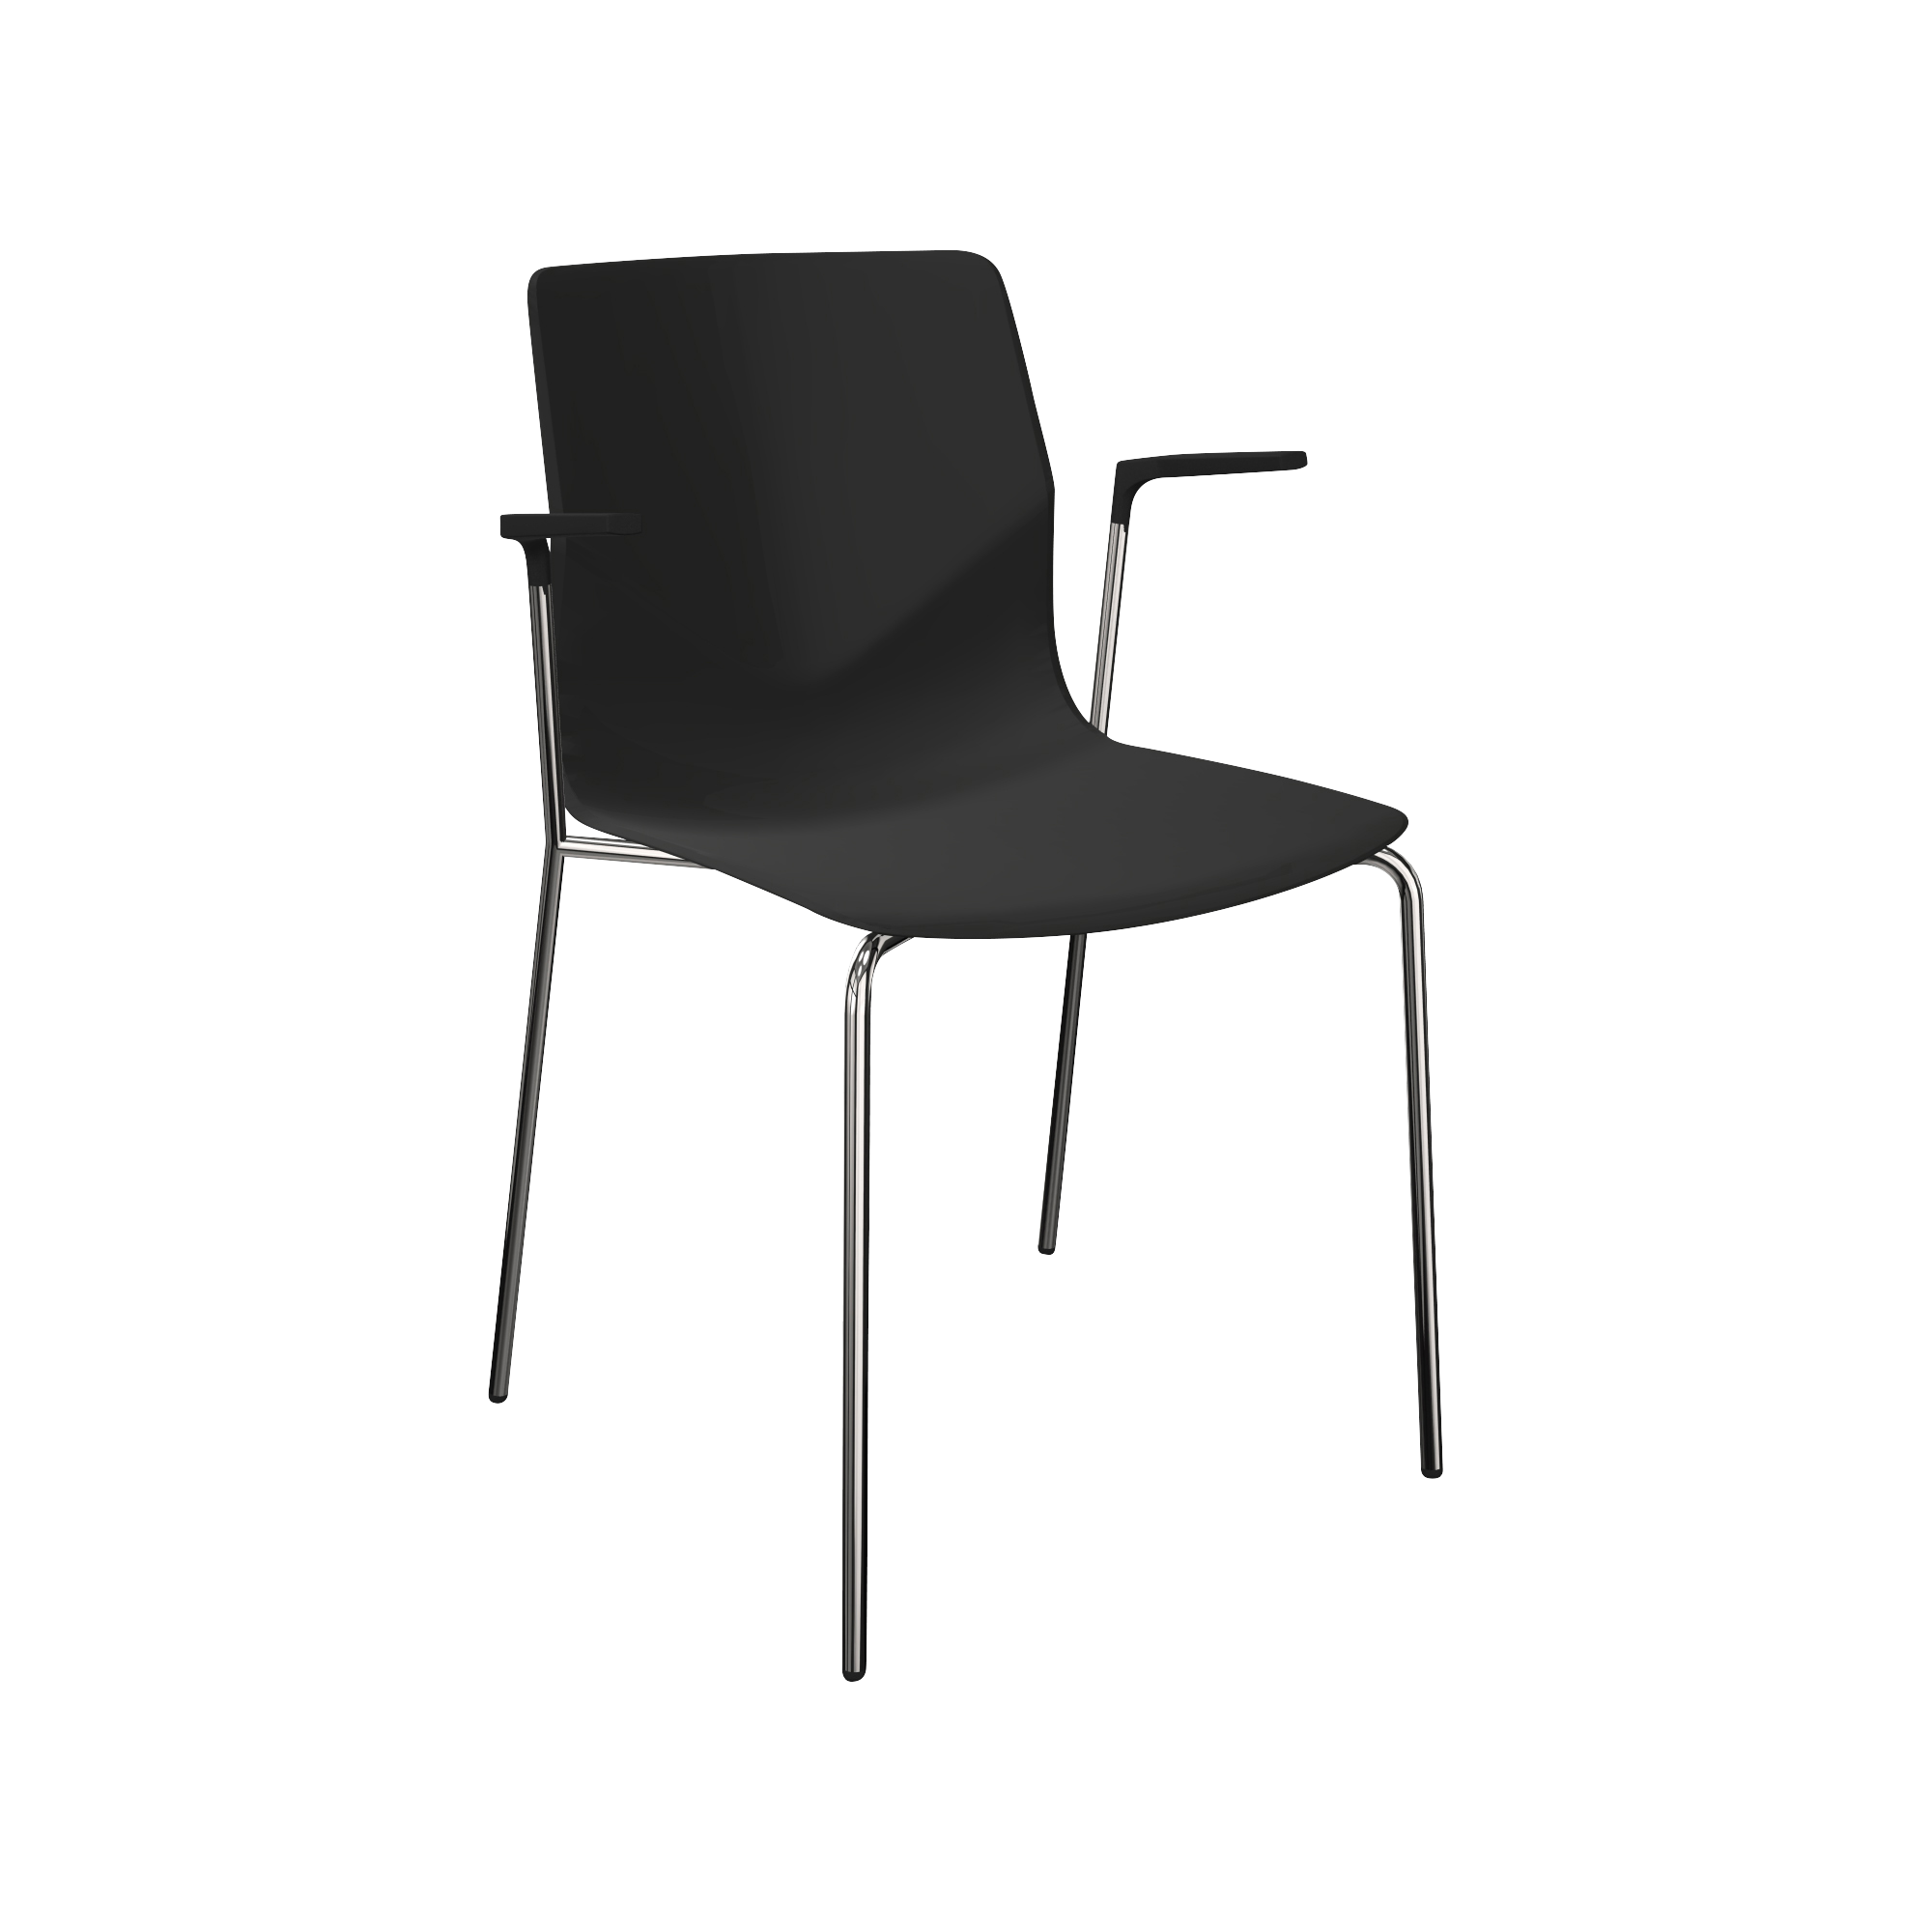 A black designer desk chair with metal legs